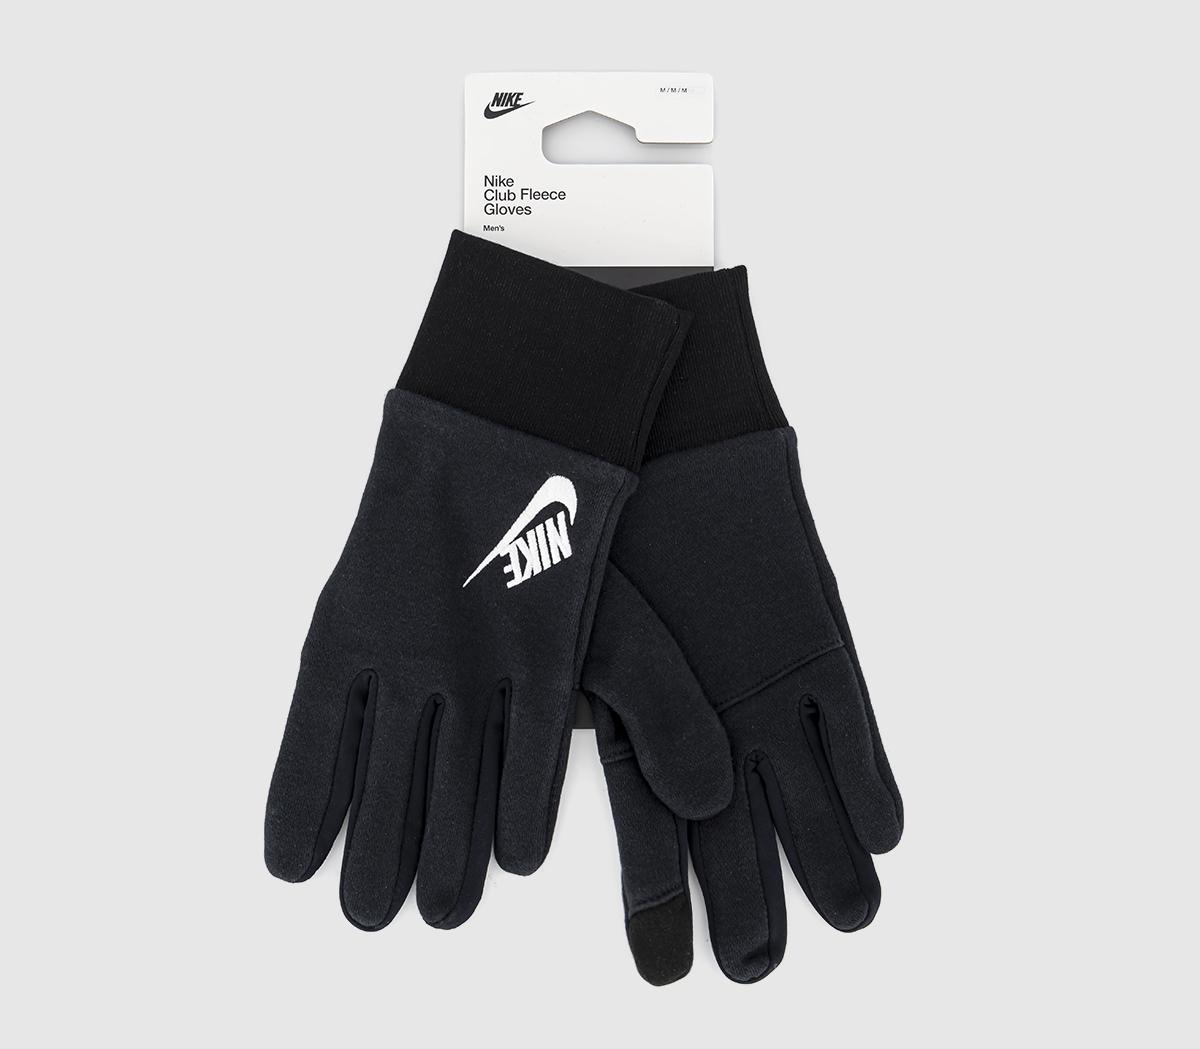 Nike AccessoriesTg Club Fleece GlovesBlack Black White